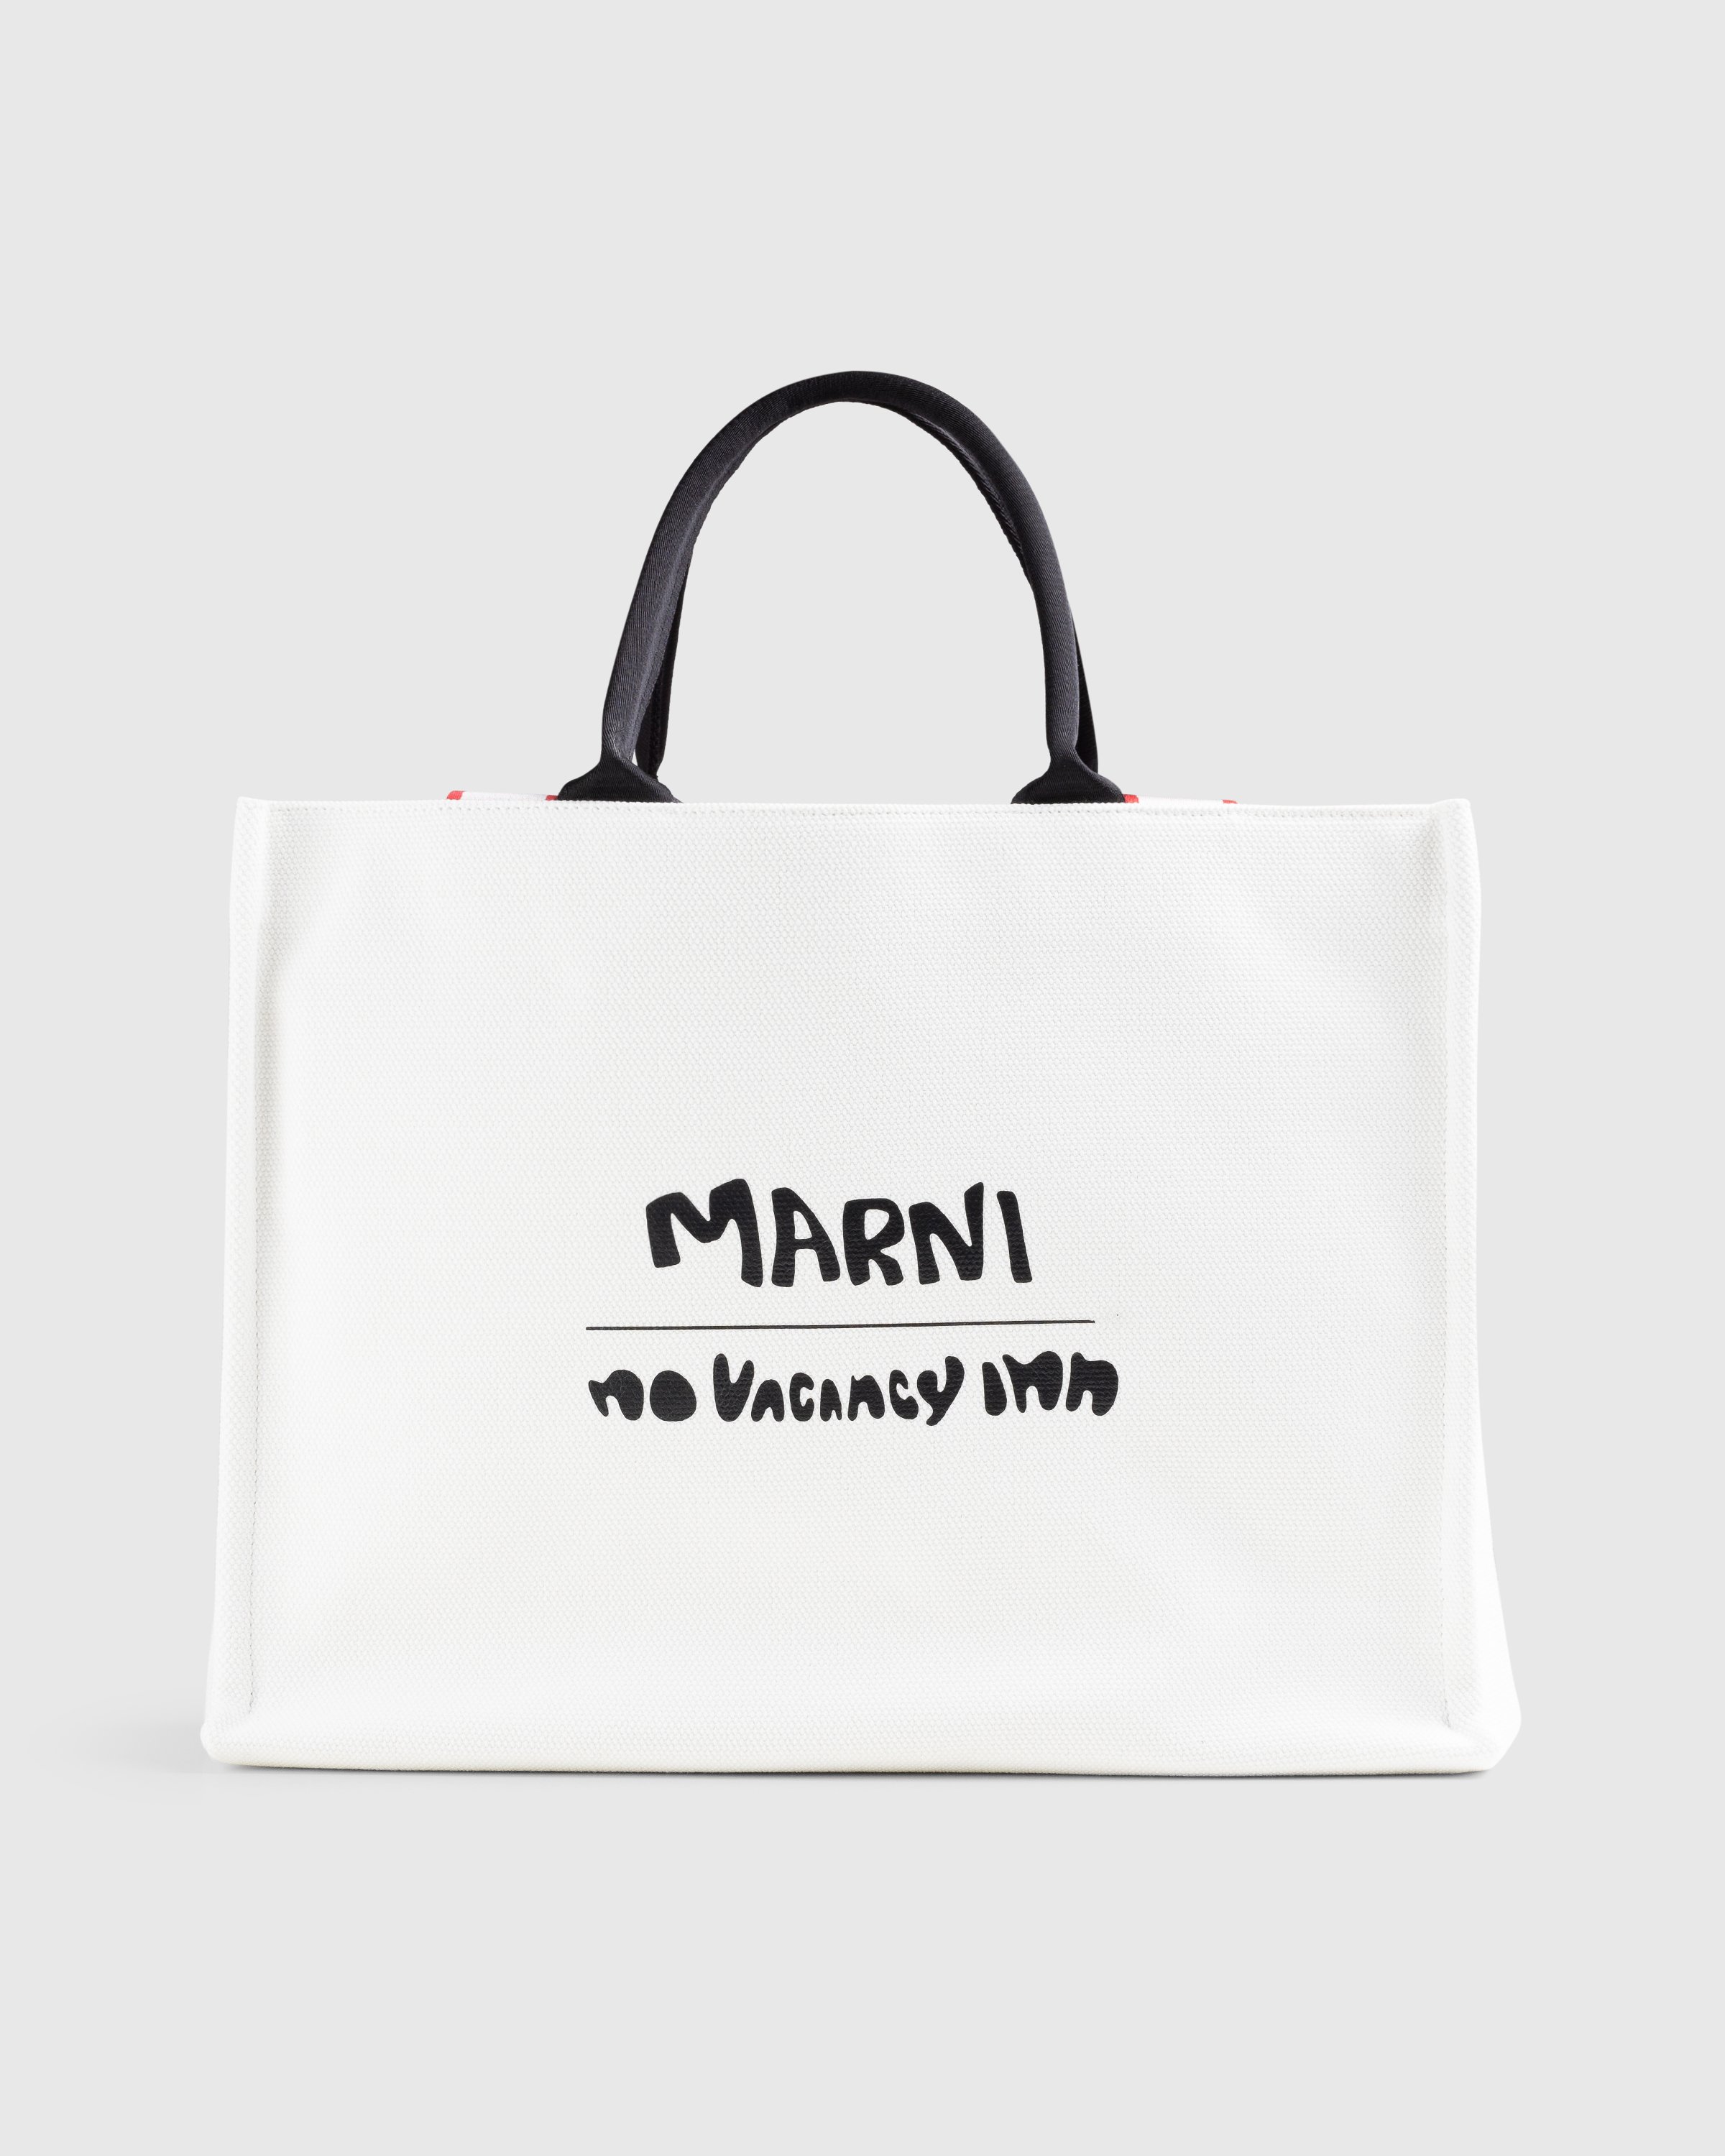 Marni x No Vacancy Inn – Bey Tote Bag Shell/Black | Highsnobiety Shop